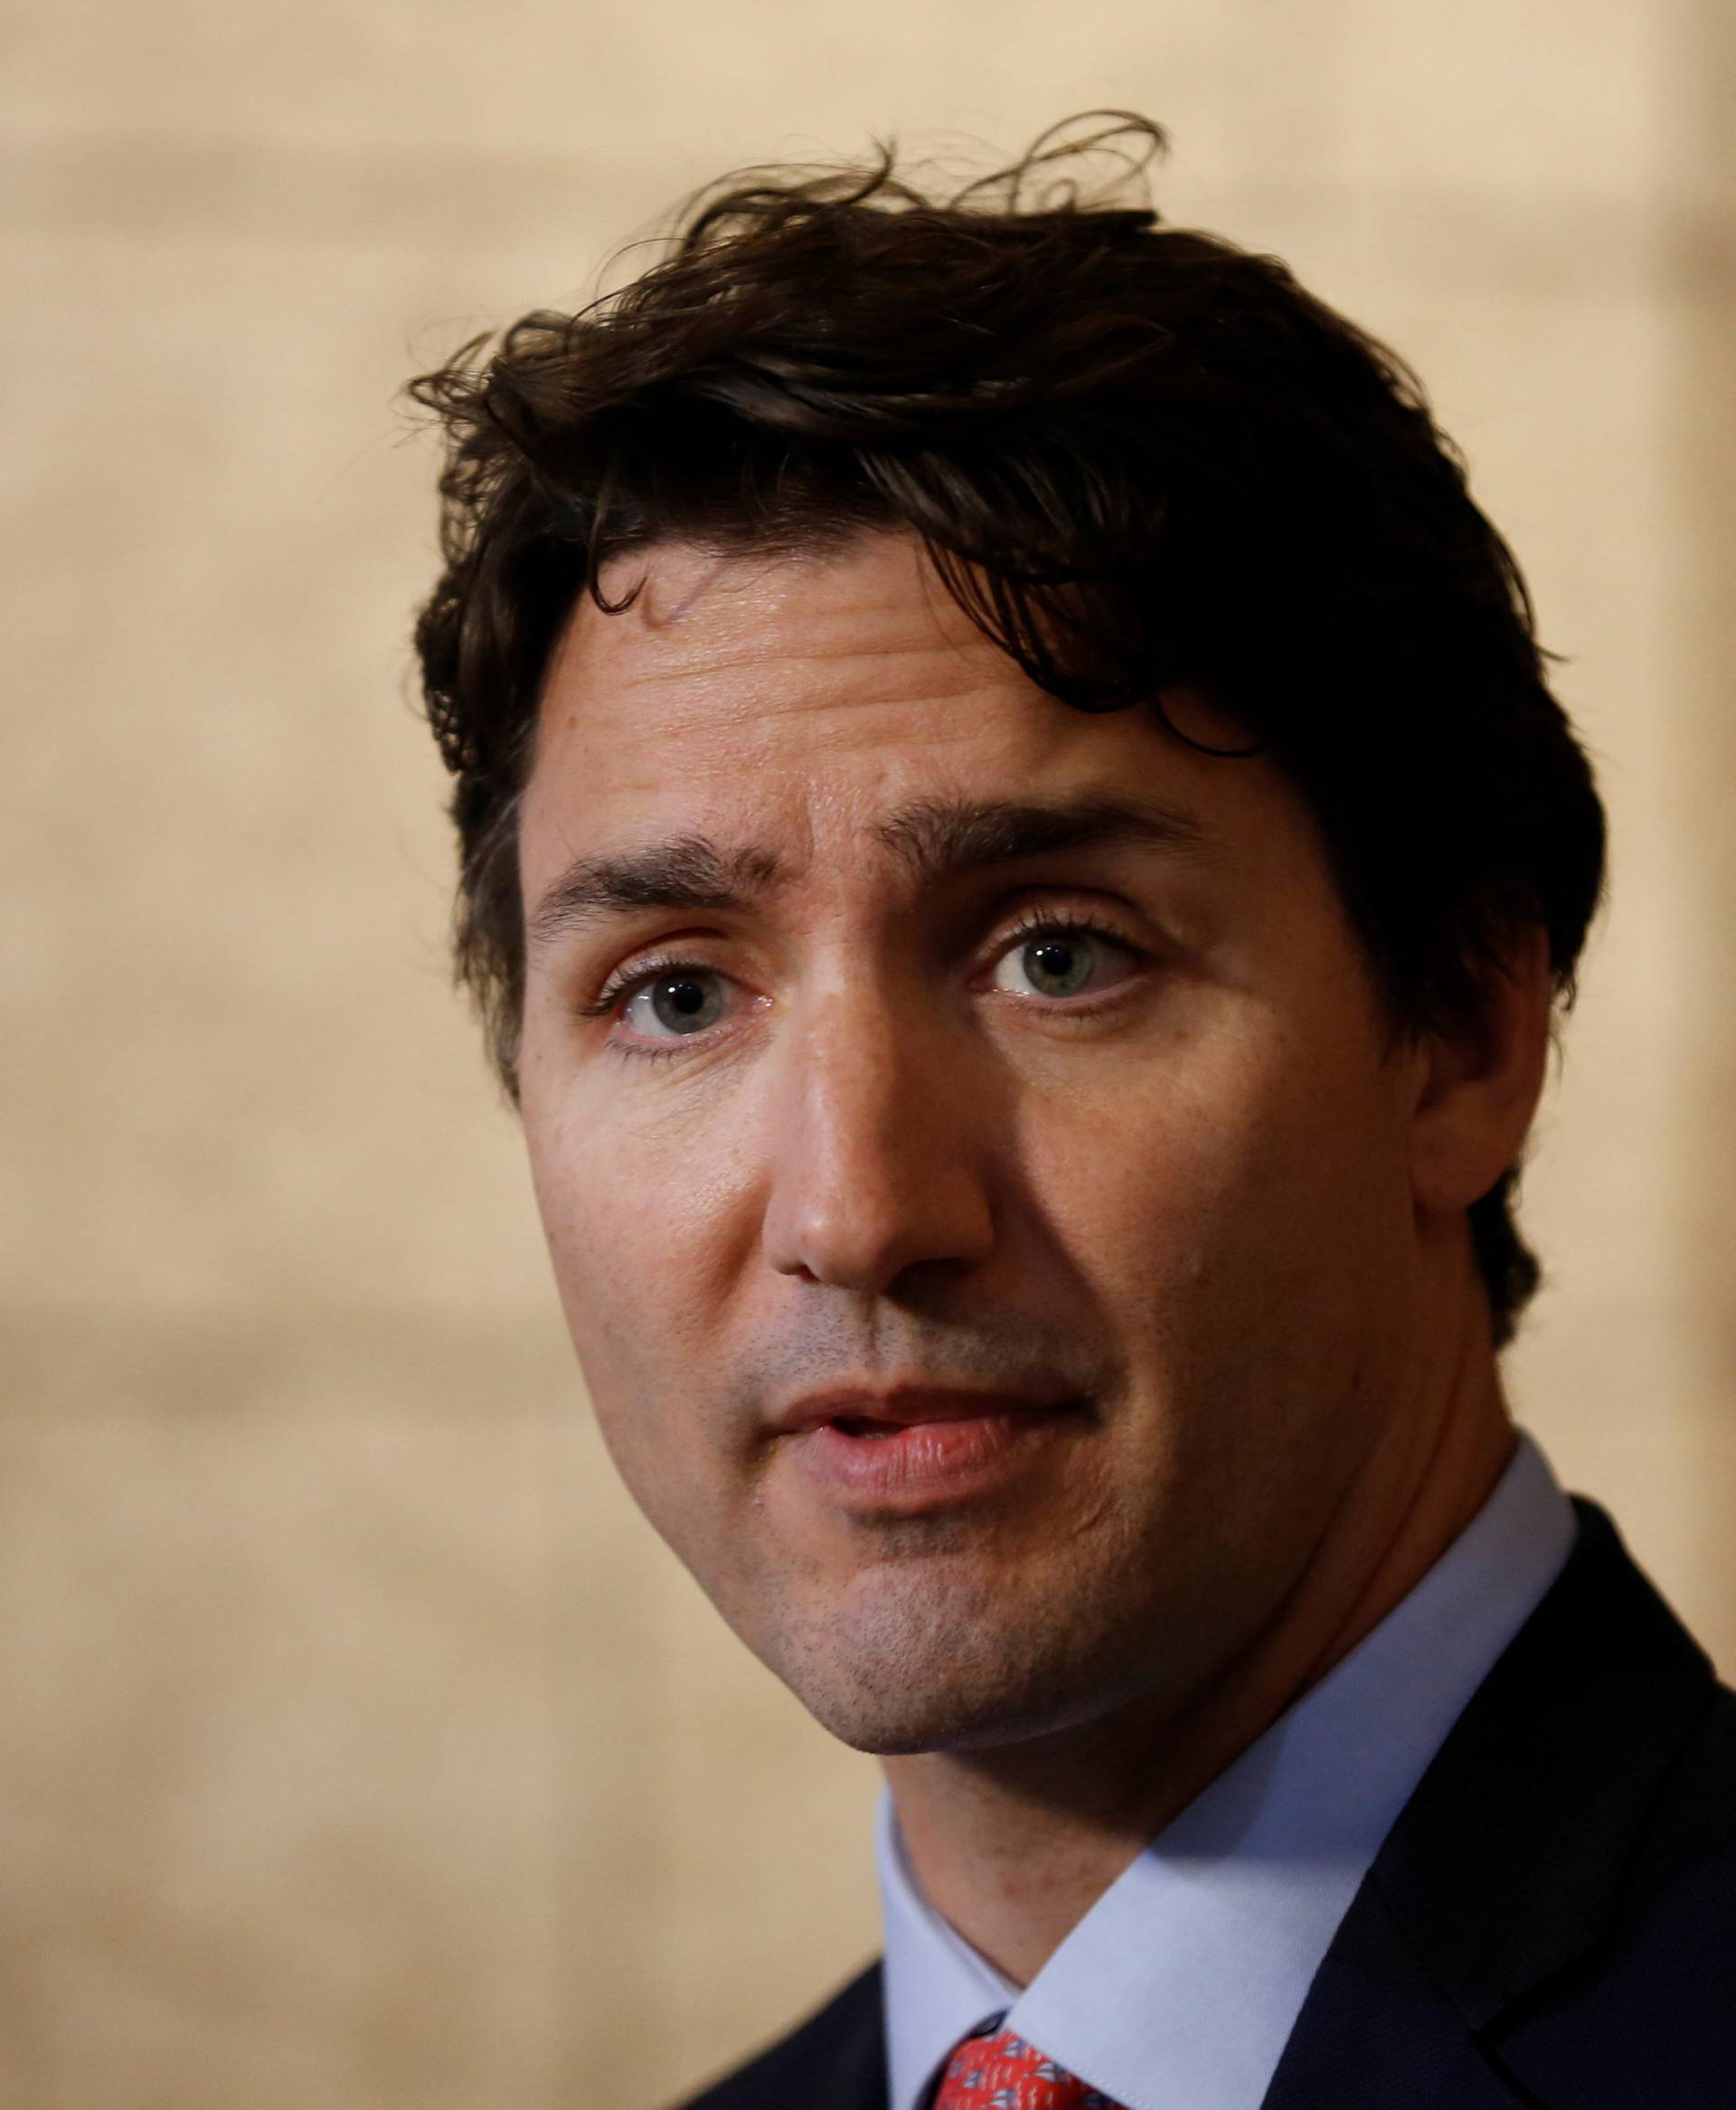 Canada's PM Trudeau delivers a statement on Parliament Hill in Ottawa